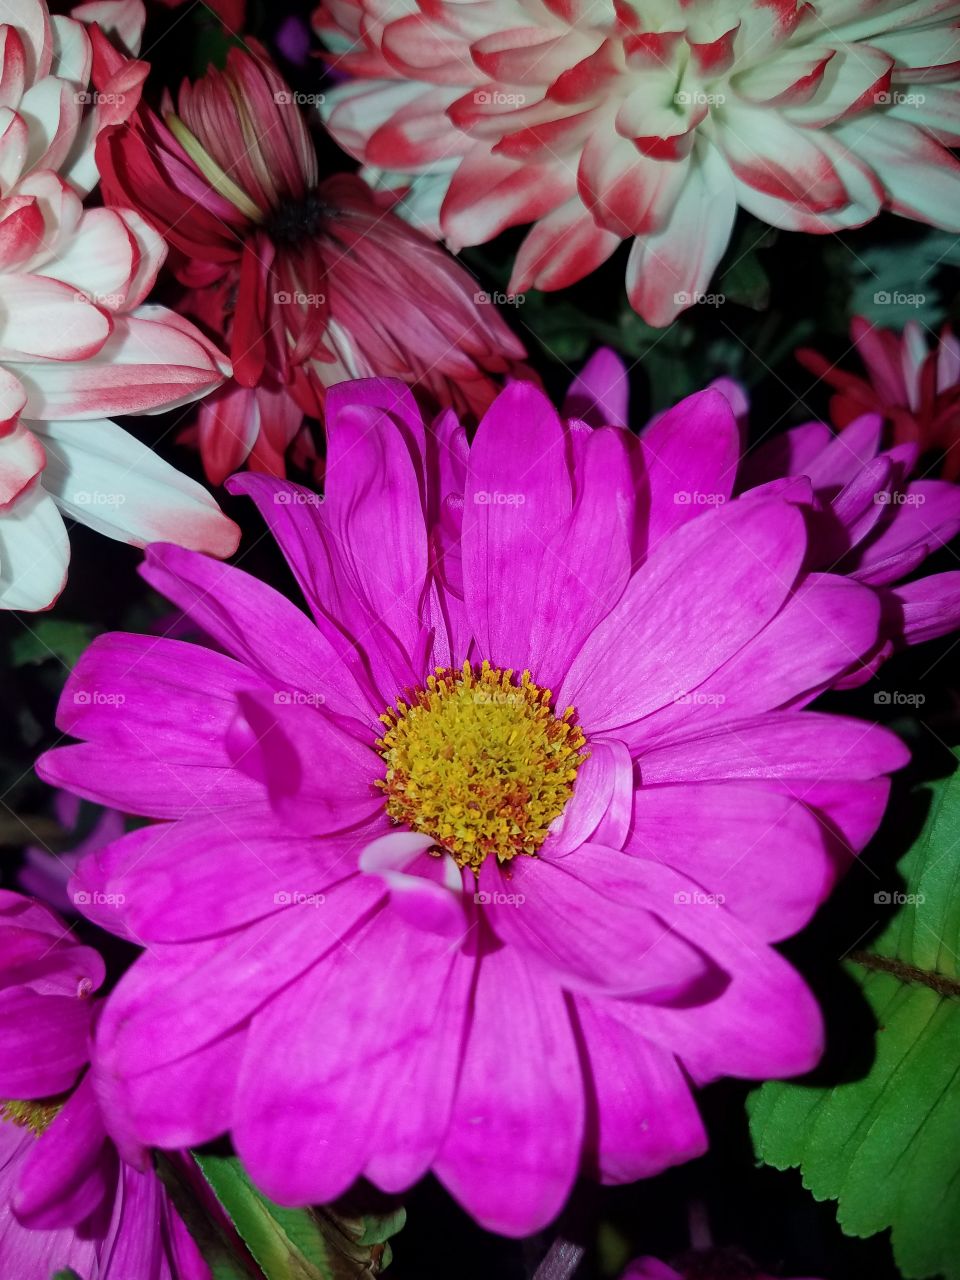 Pink daisy